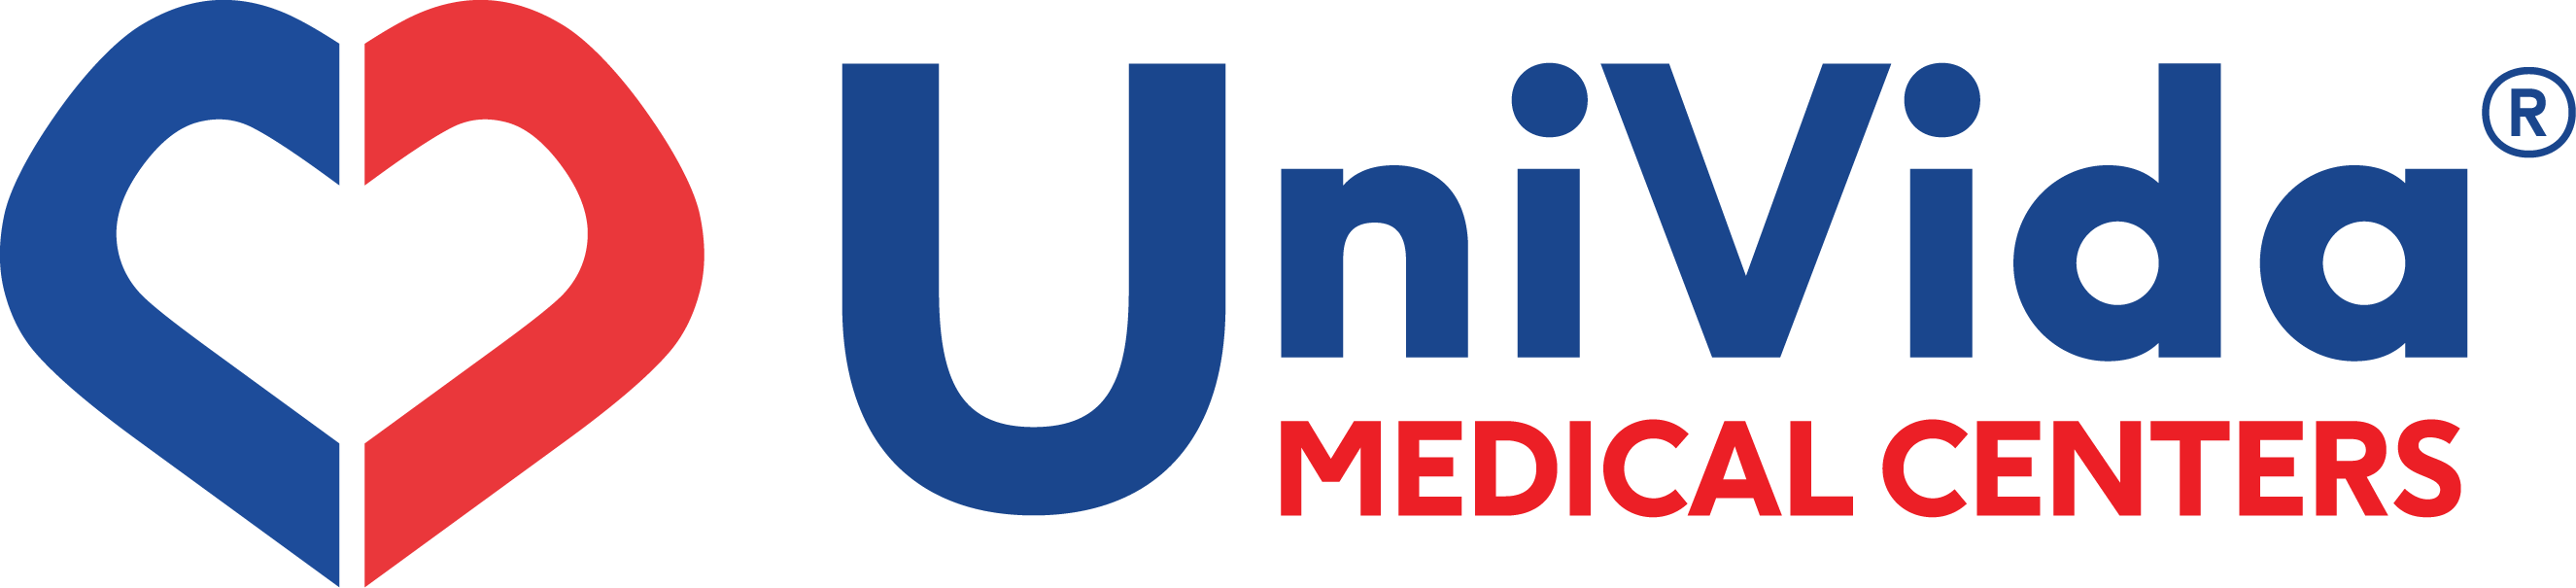 UniVida Medical Centers